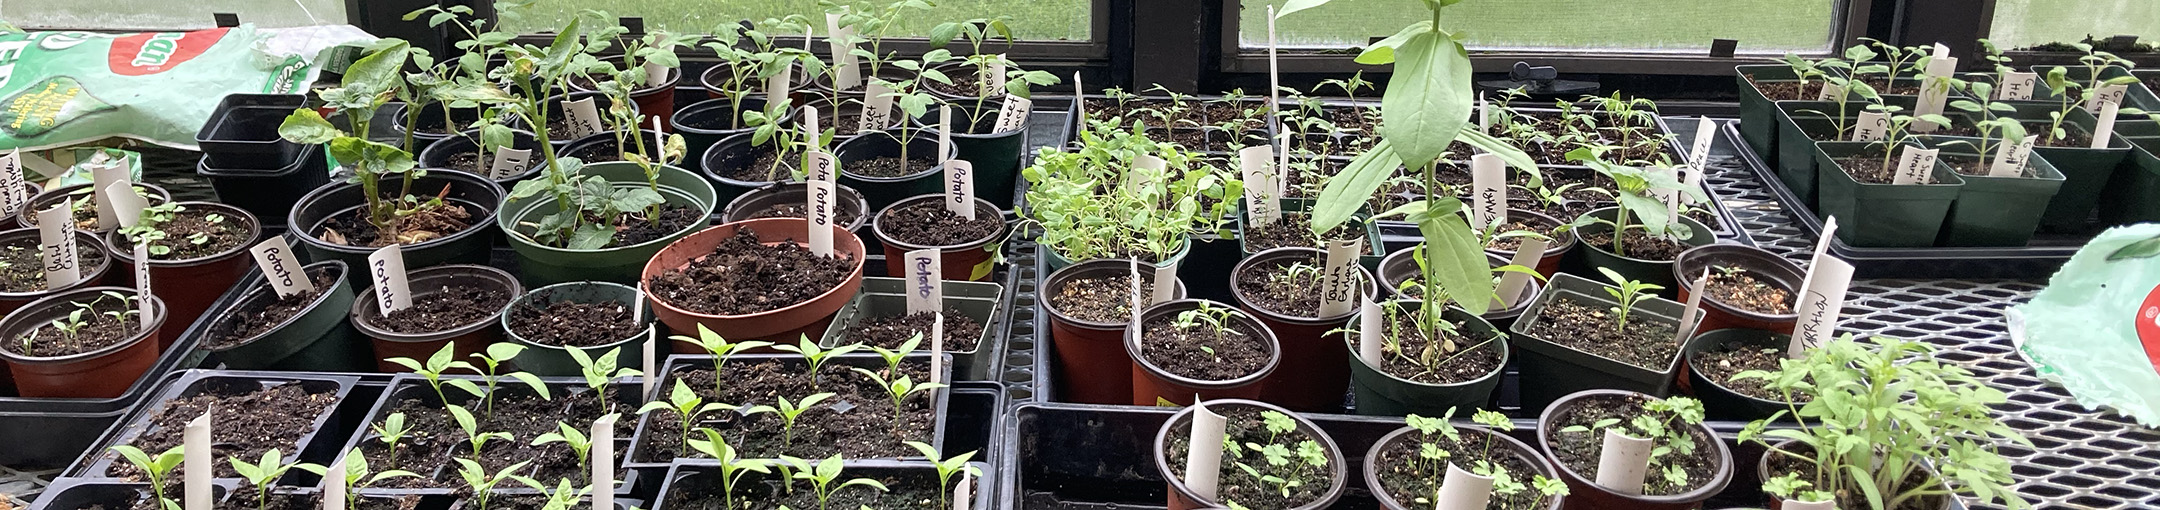 nursery pots of varying plants by greenhouse window.